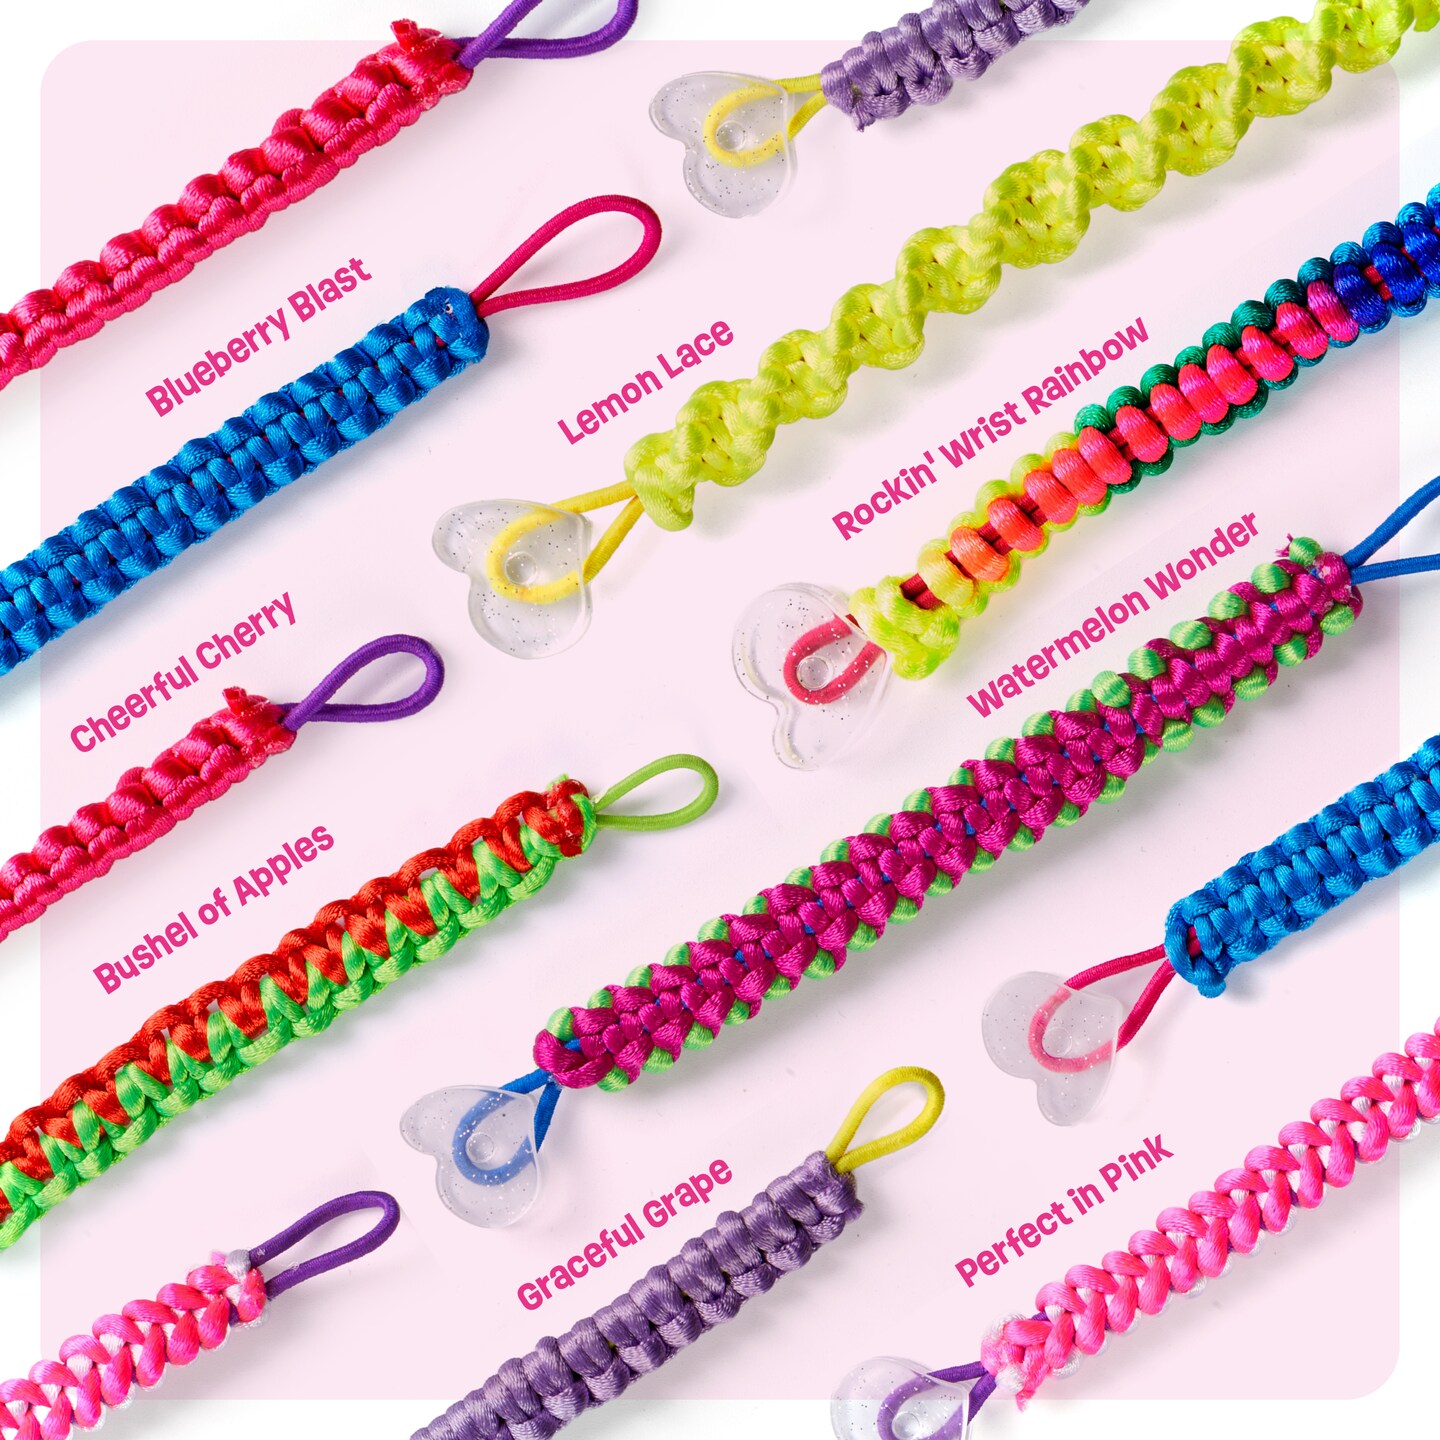 Friendship Bracelet Making Kit for Girls - Crafts for Girls - String Bracelets Maker Craft - Gifts for 6-12 Year Old Girl - Birthday Gift Ideas &#x26; Kits Toys